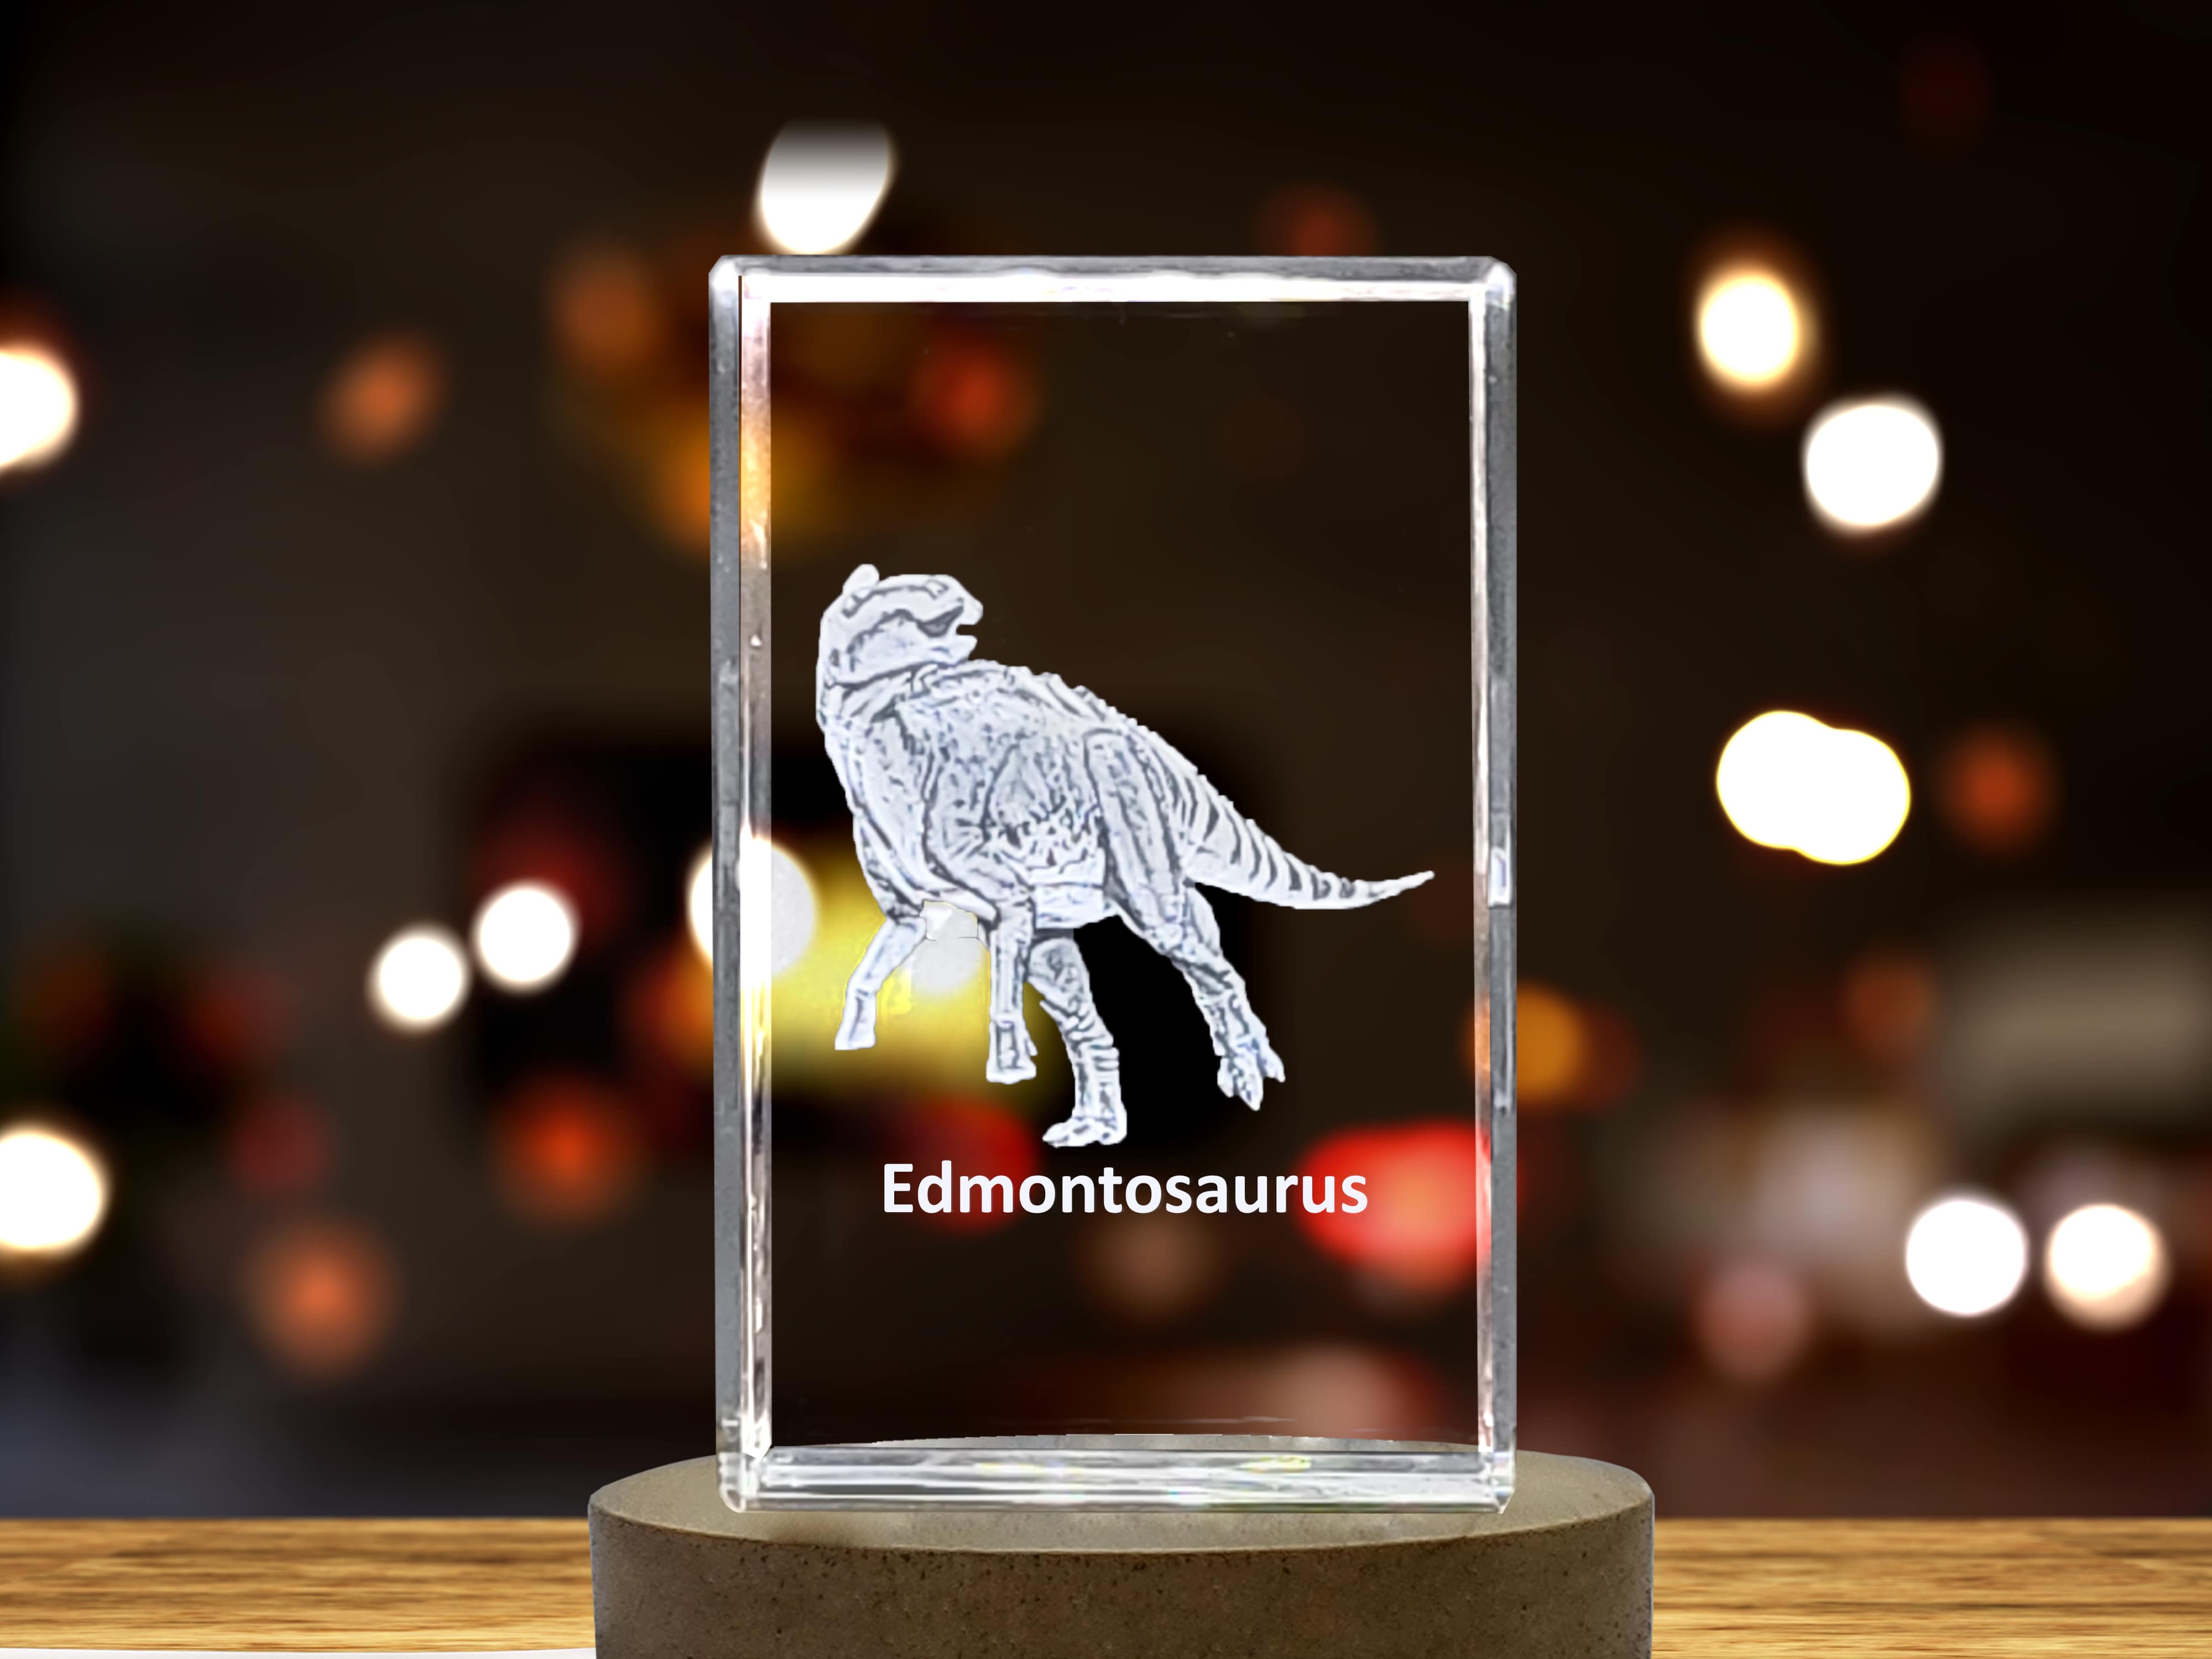 Edmontosaurus Dinosaur 3D Engraved Crystal 3D Engraved Crystal Keepsake/Gift/Decor/Collectible/Souvenir A&B Crystal Collection